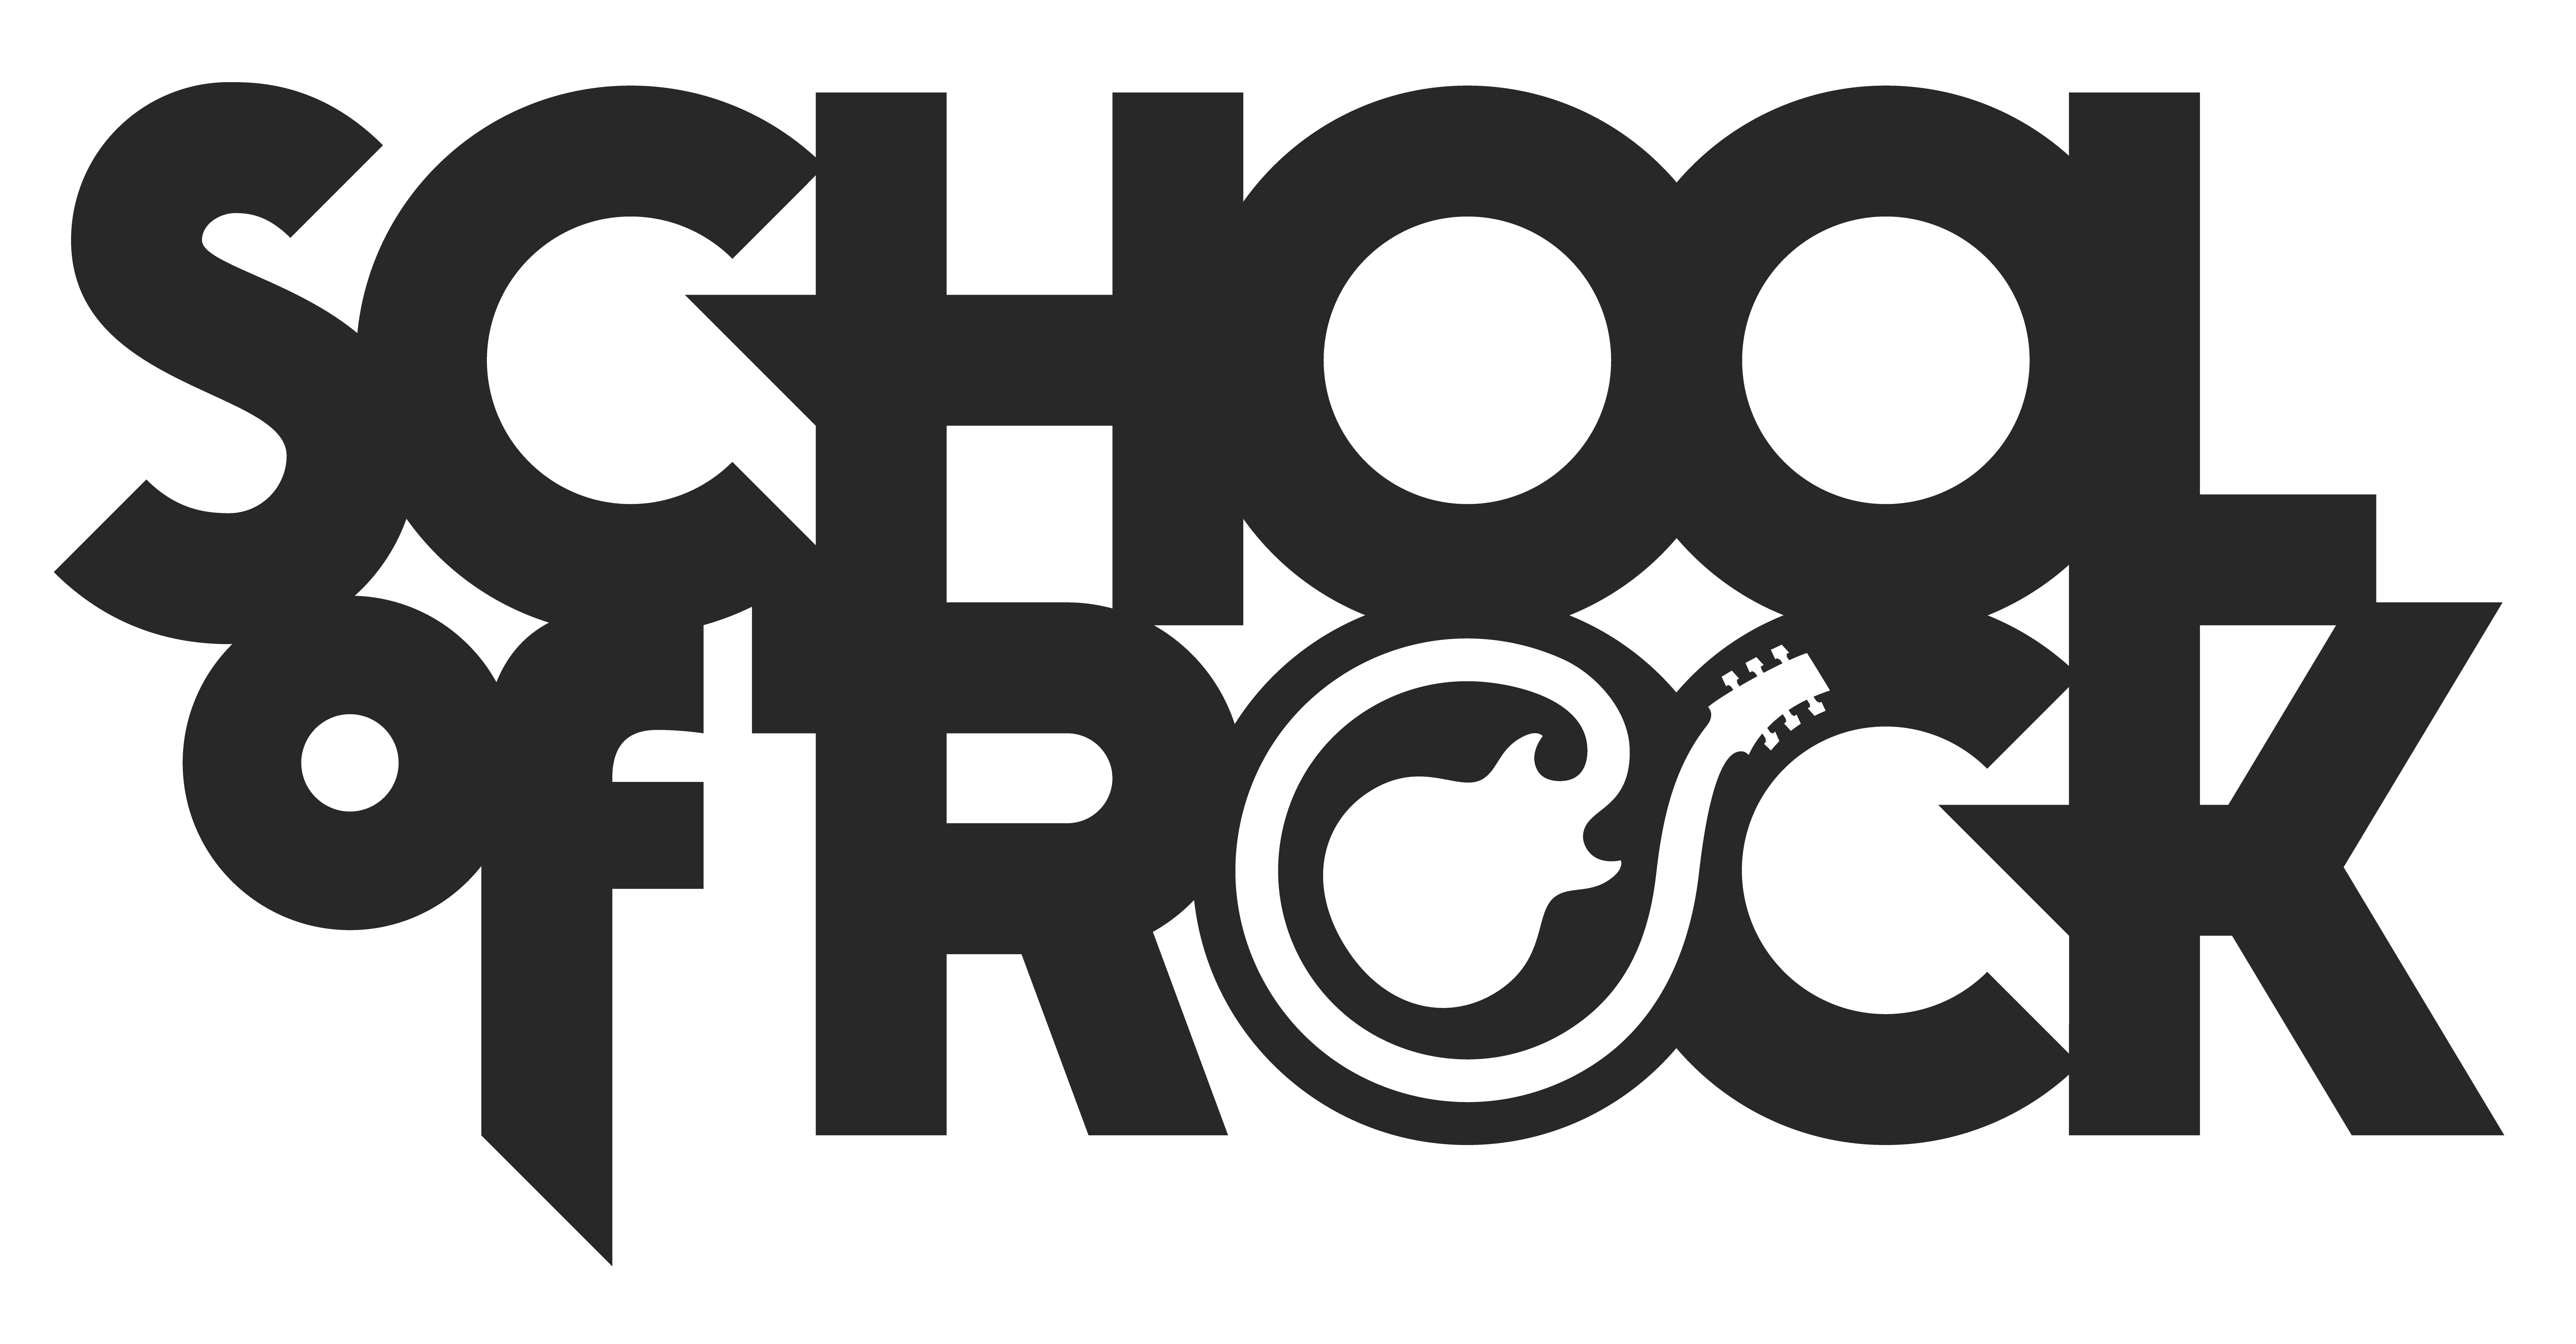 School Of Rock Logo